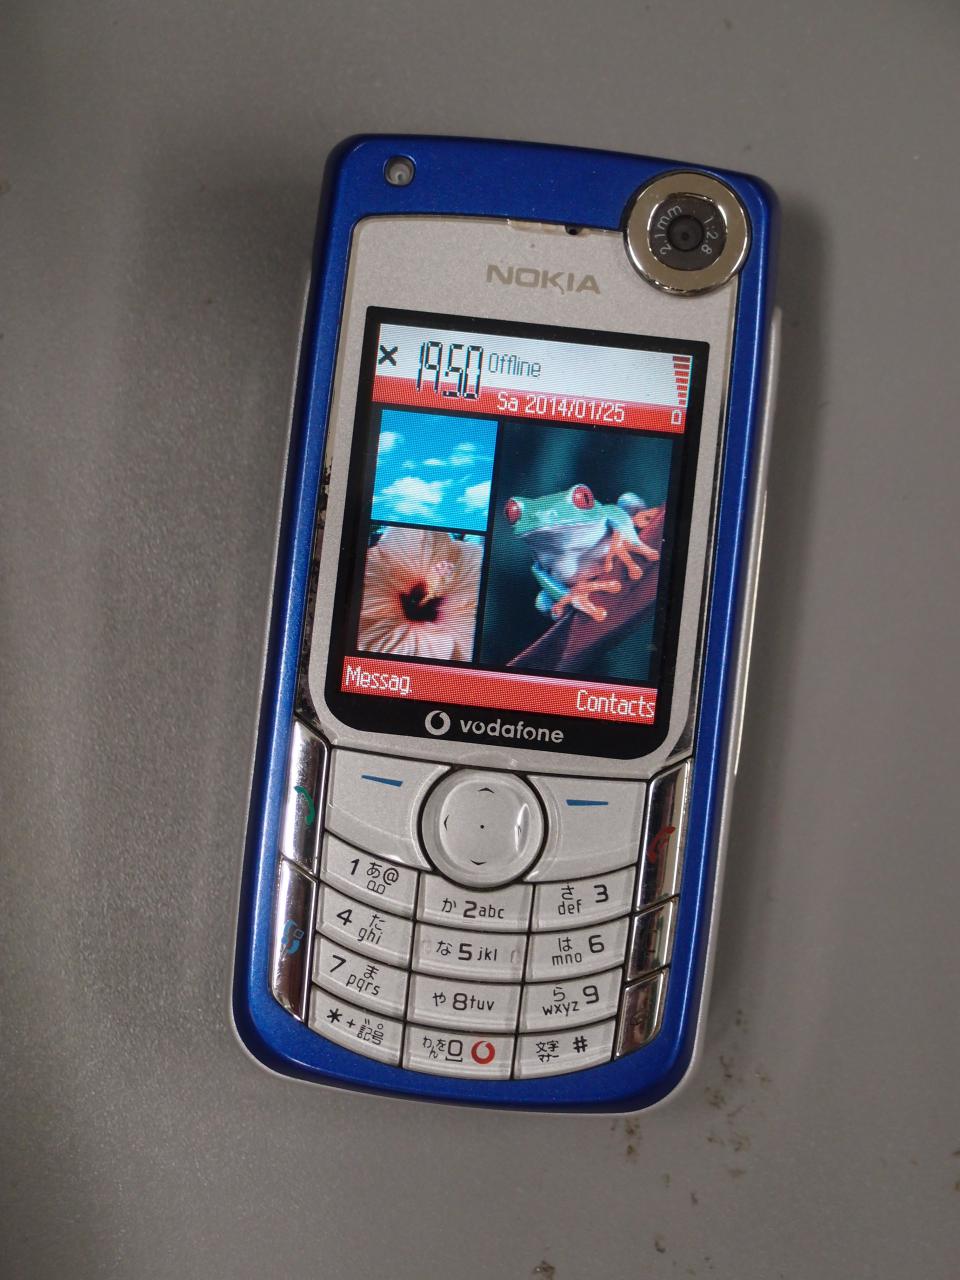 GSM携帯 Nokia 6680 (着せ替え外装ケース付き)